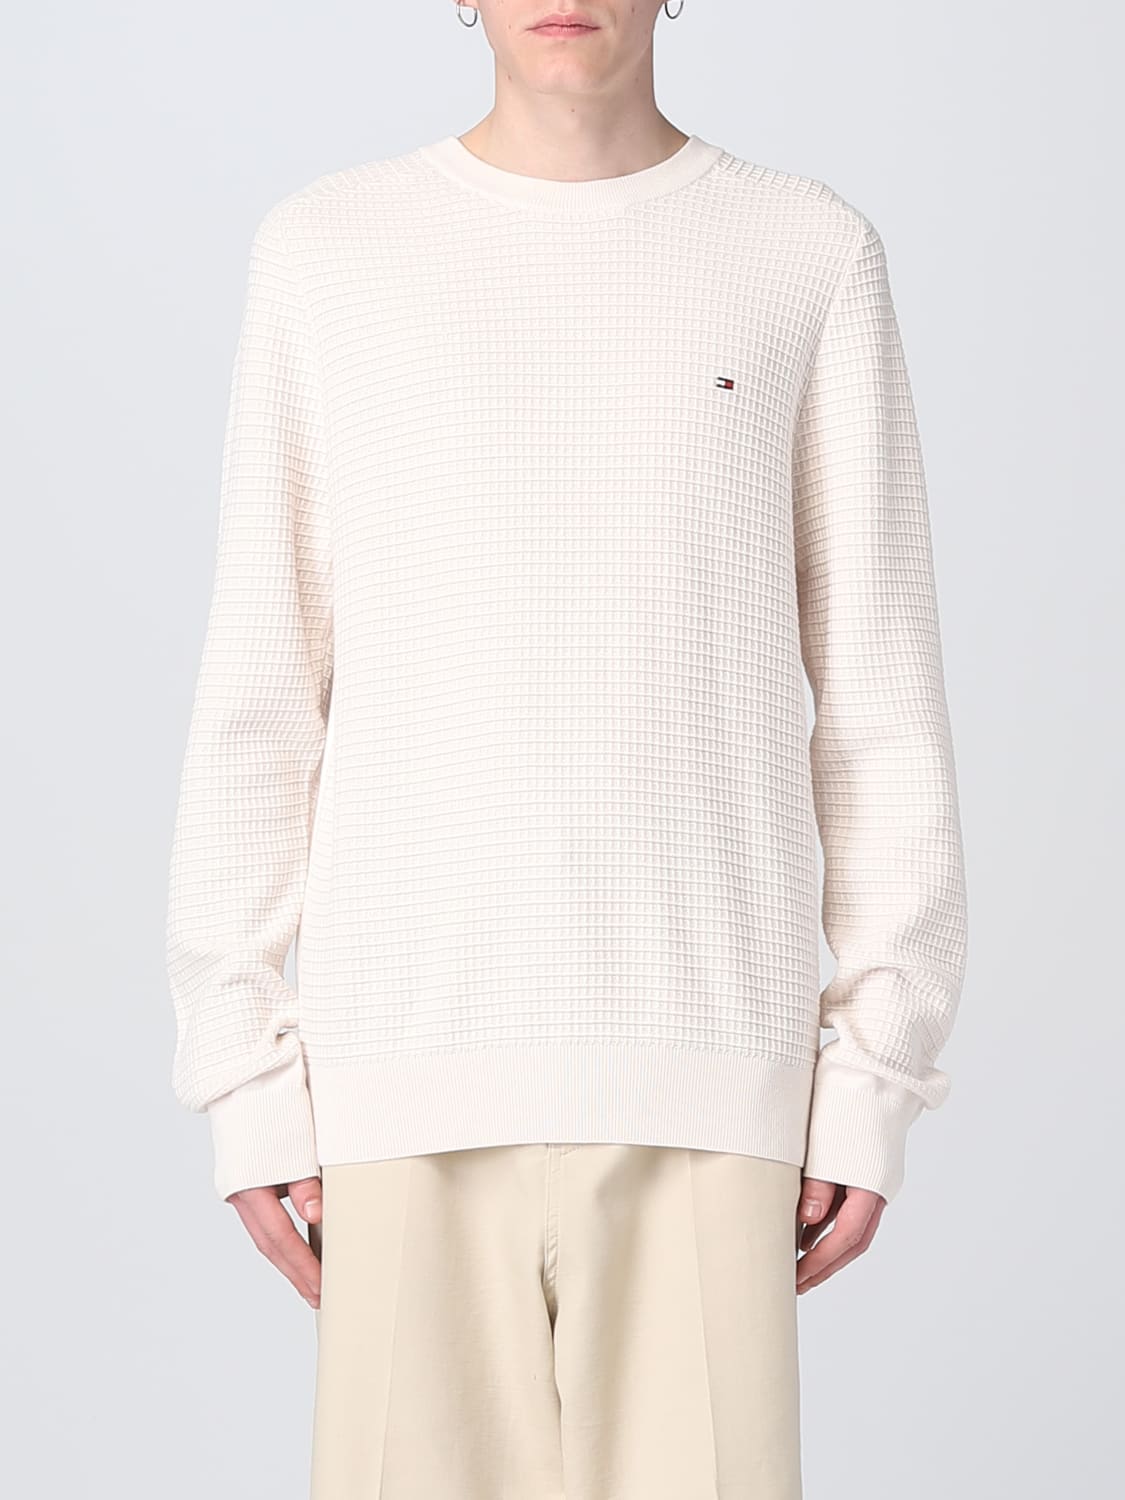 HILFIGER: sweater - White | Tommy Hilfiger sweater MW0MW31032 online on